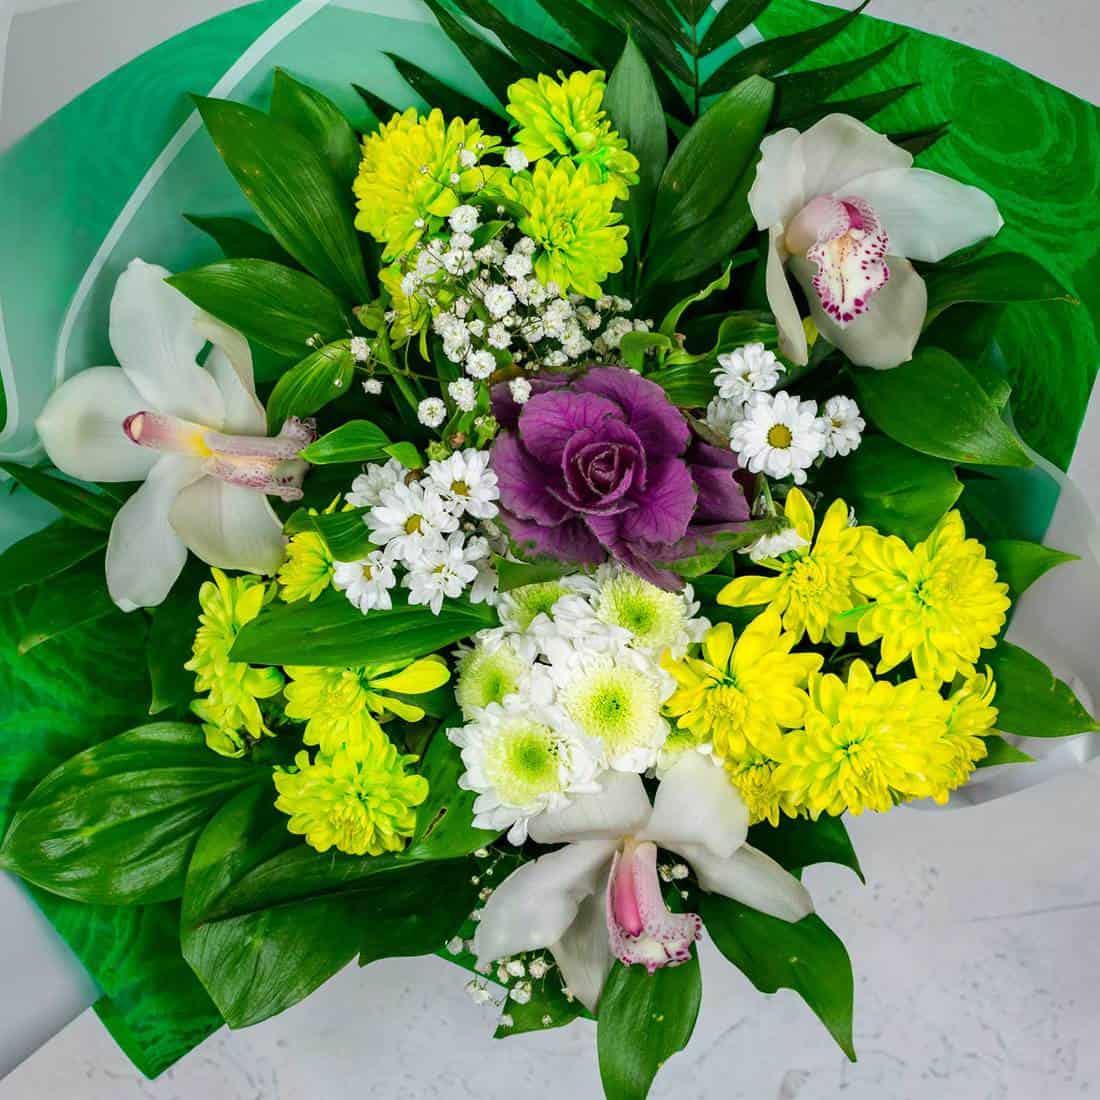 Big beautiful bouquet of flowers with mixed flower arrangement